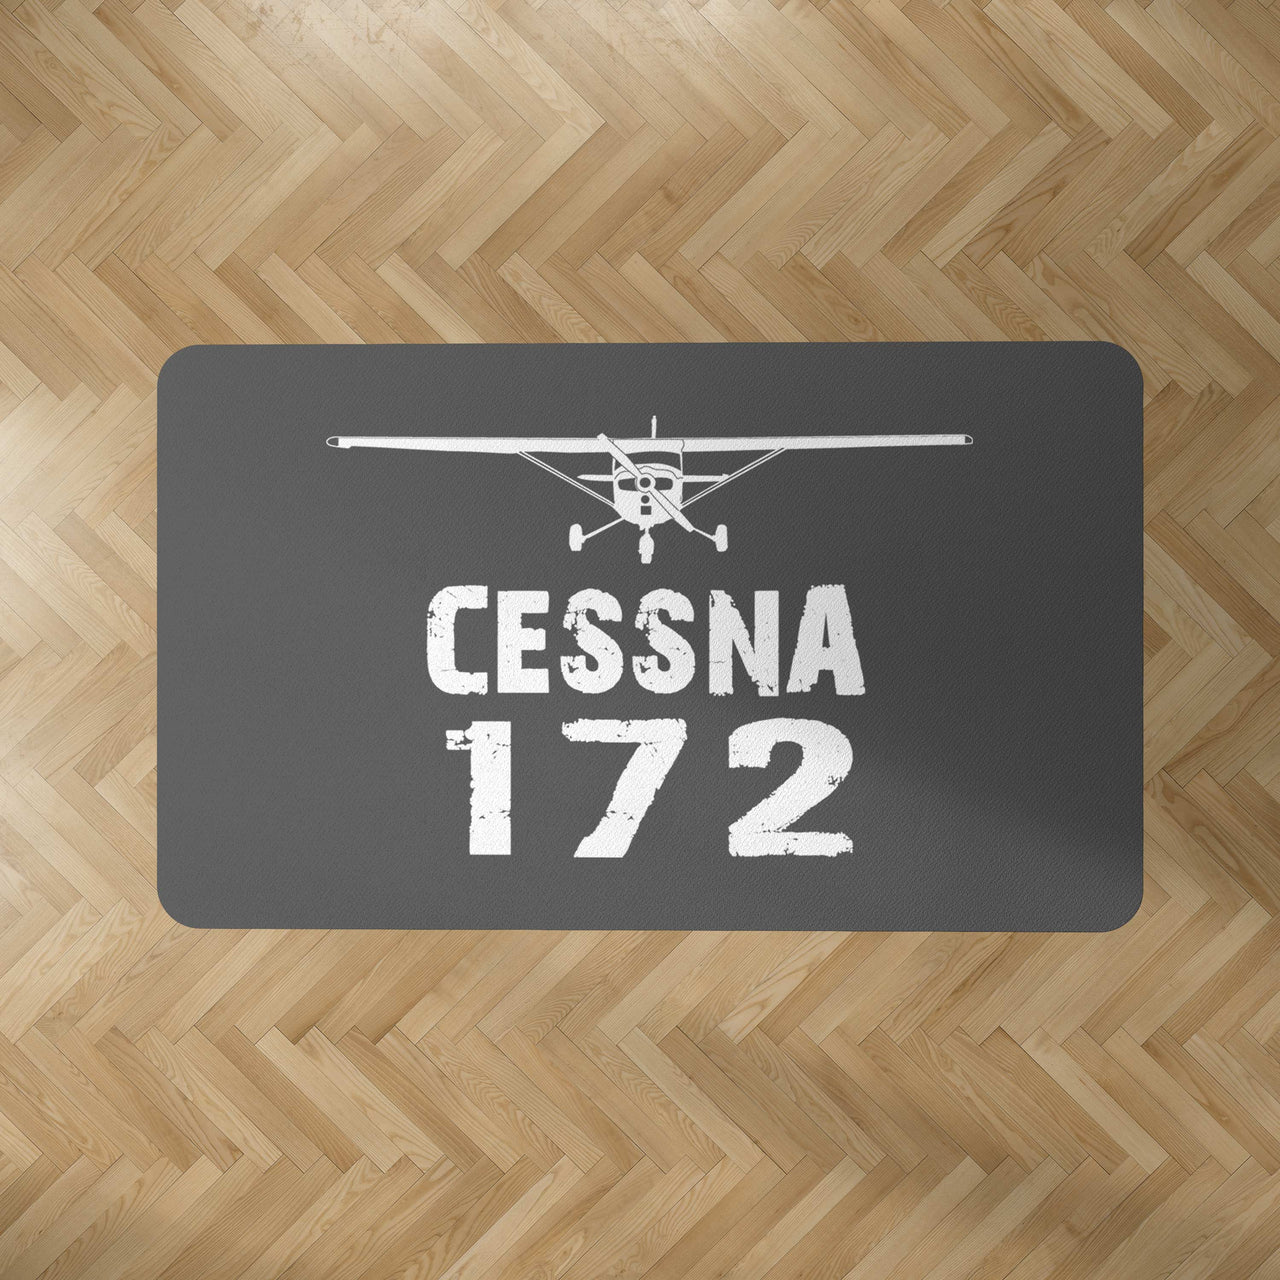 Cessna 172 & Plane Designed Carpet & Floor Mats